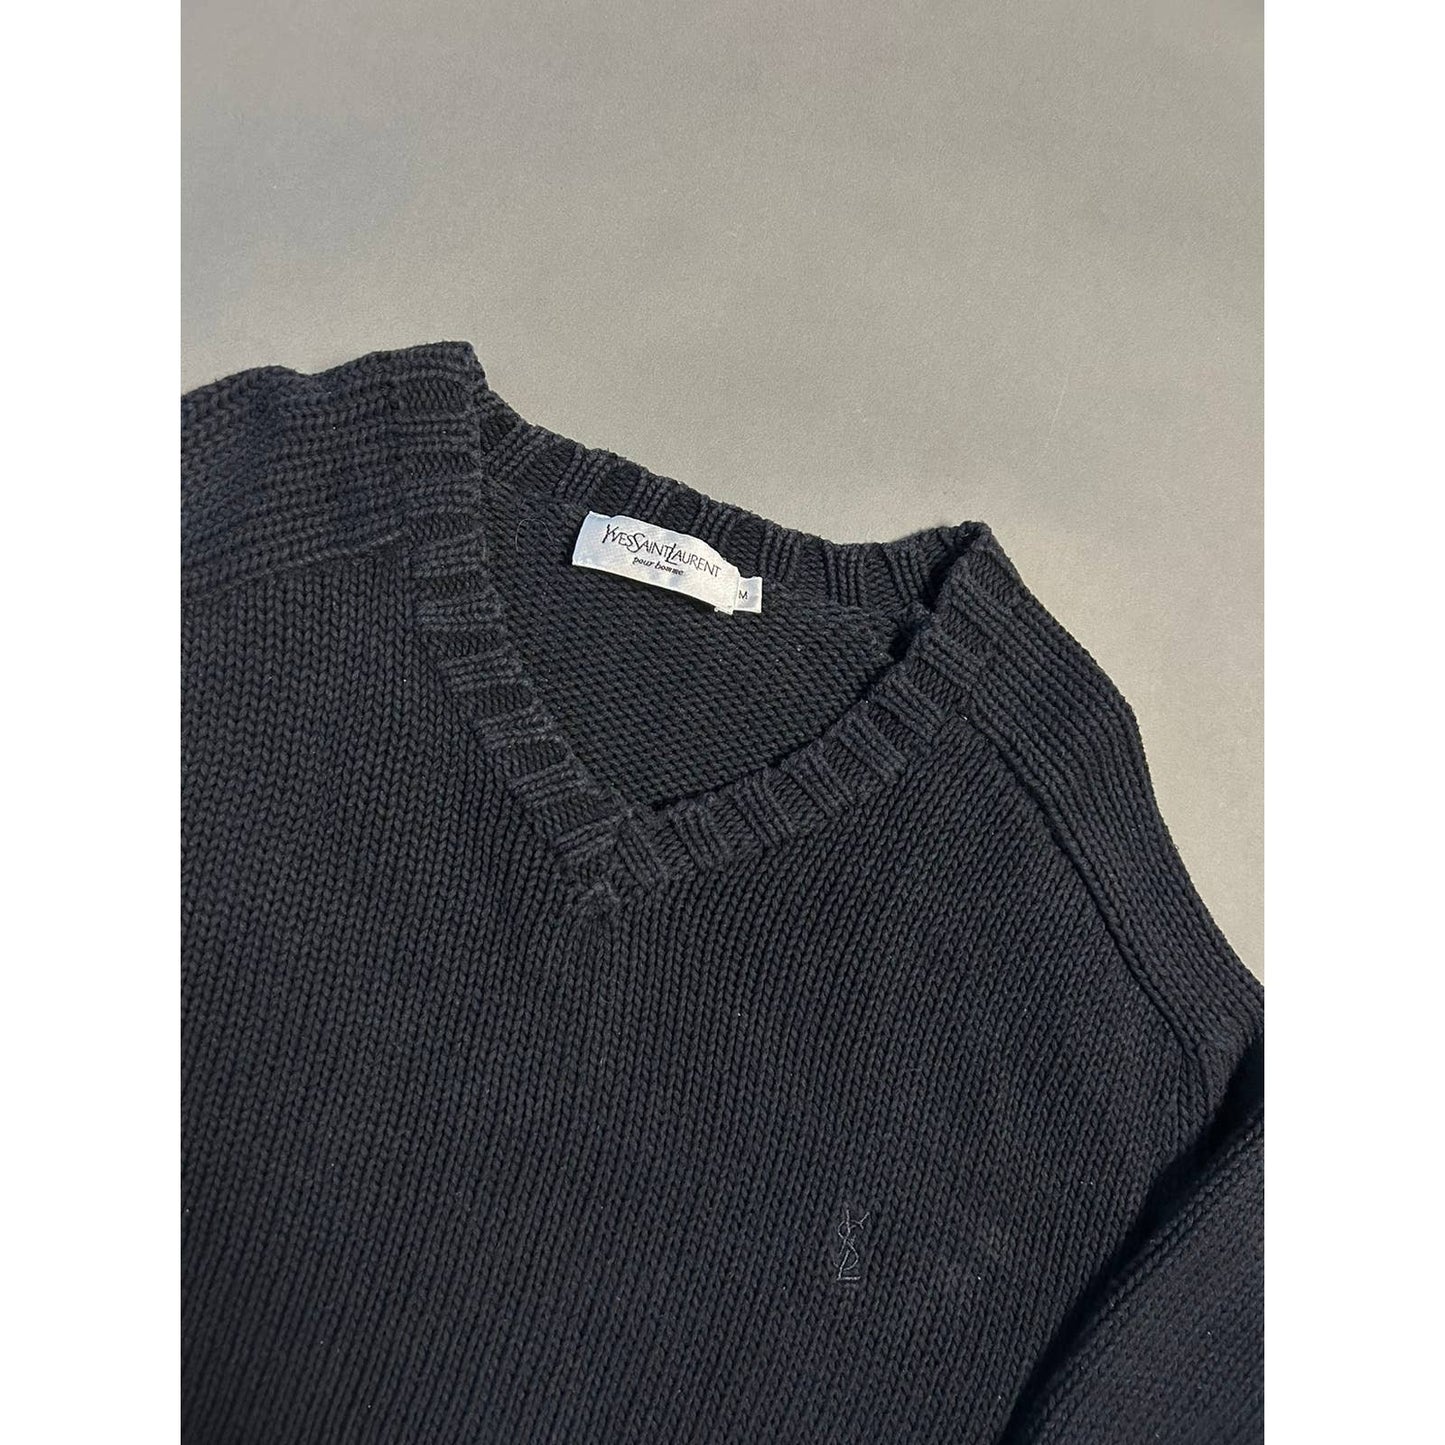 Yves Saint Laurent sweater navy vintage small logo YSL 90s